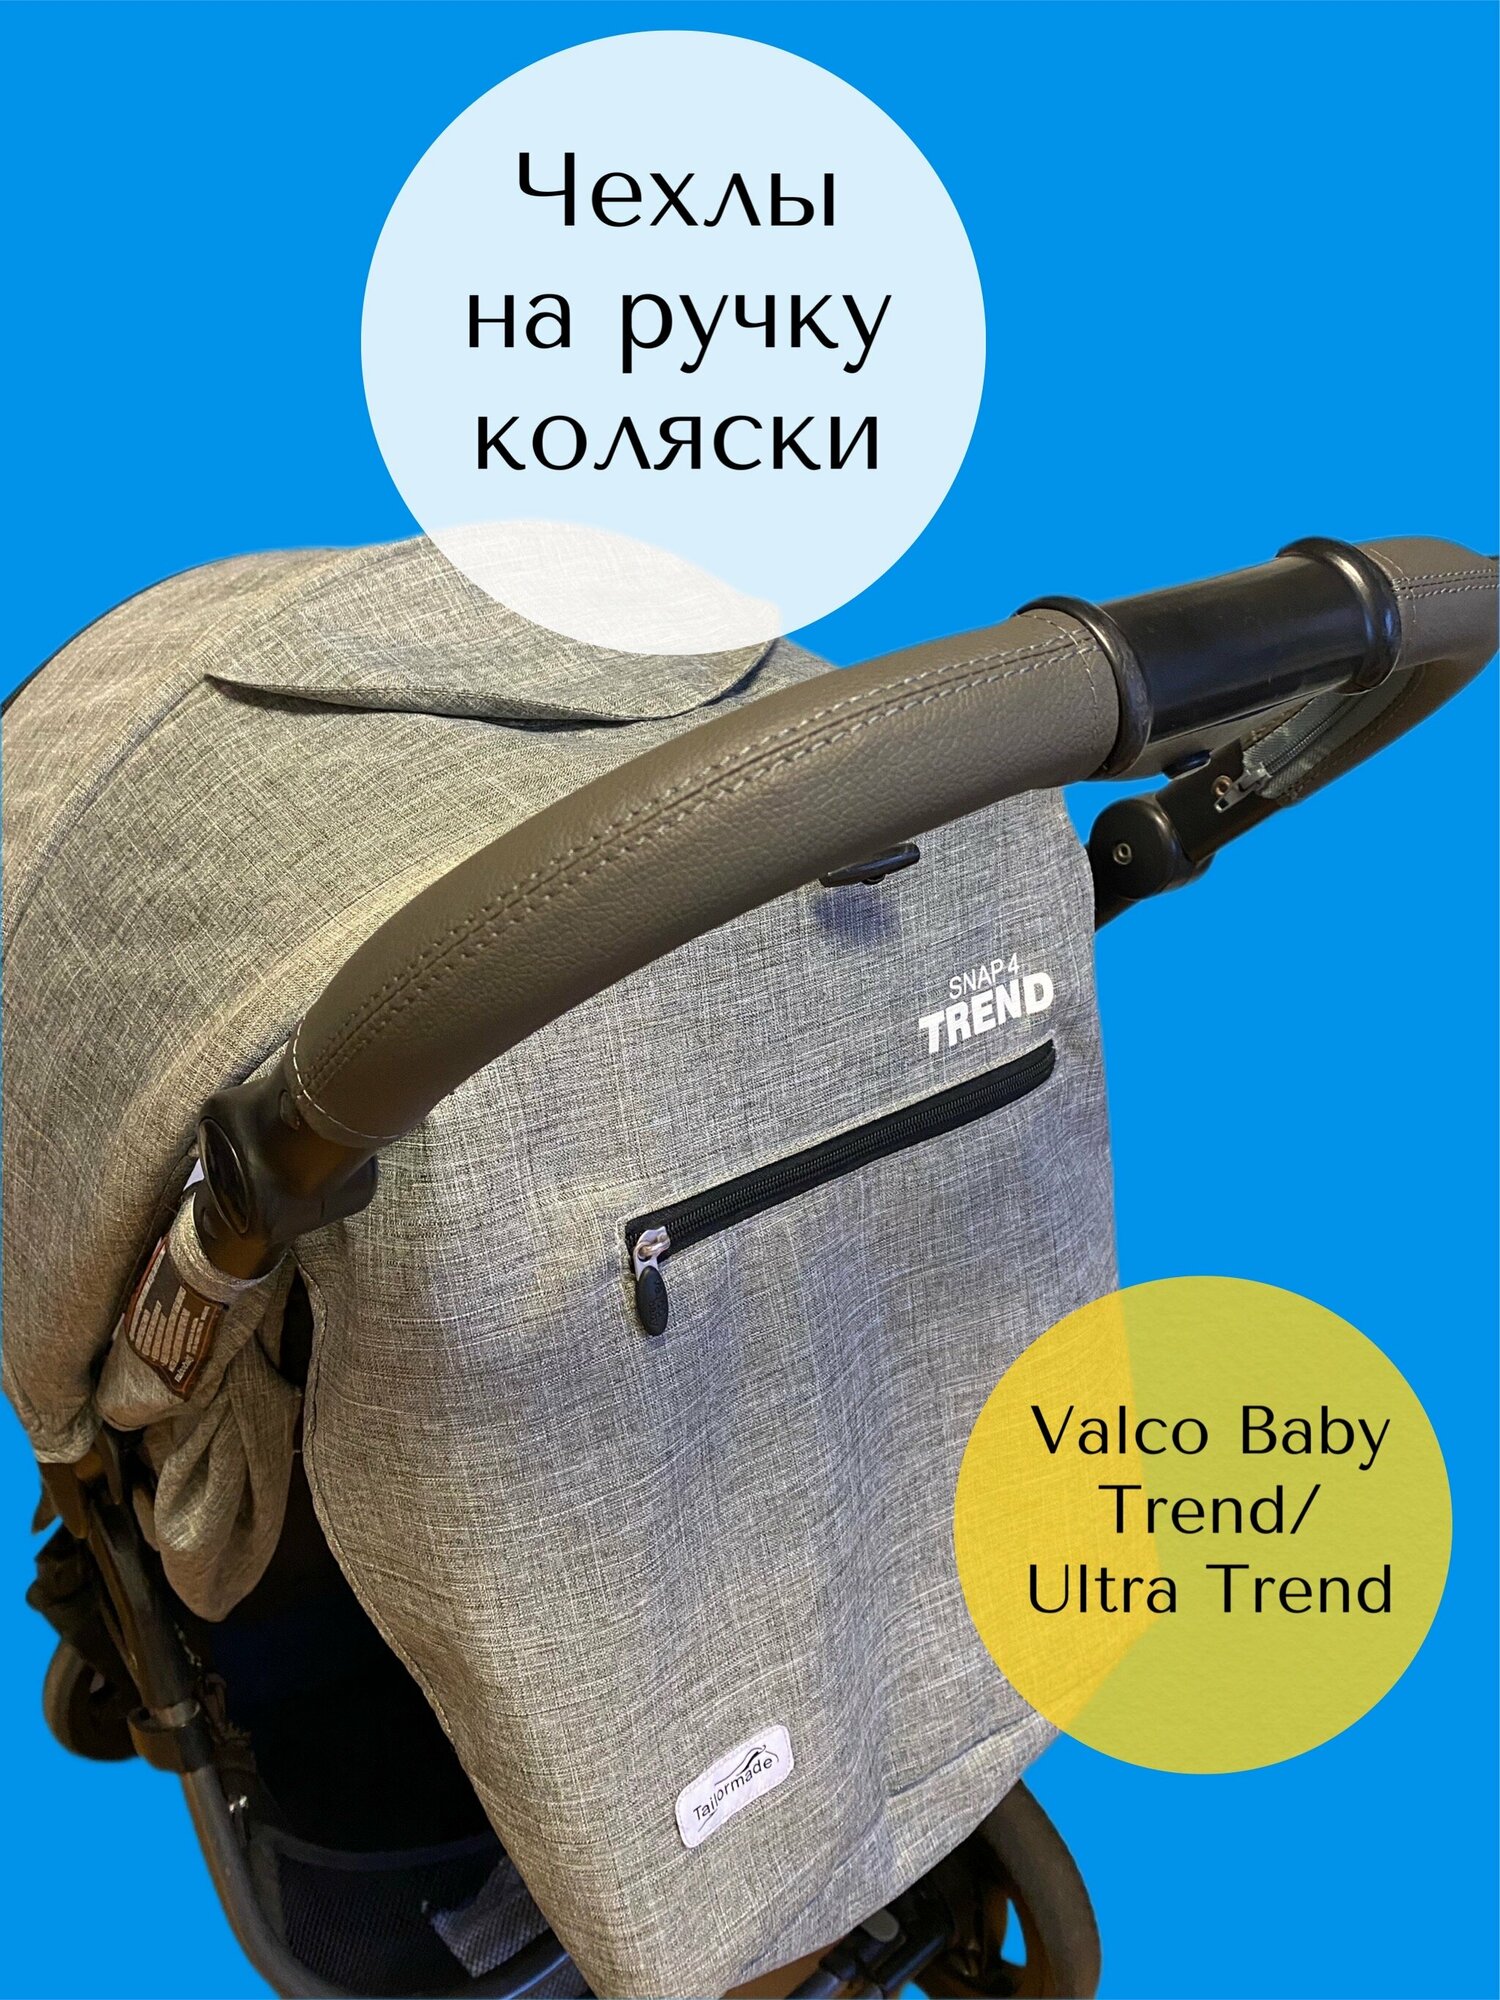 Комплект чехлы на ручку и бампер коляски Valco Baby Snap 4 TREND серый